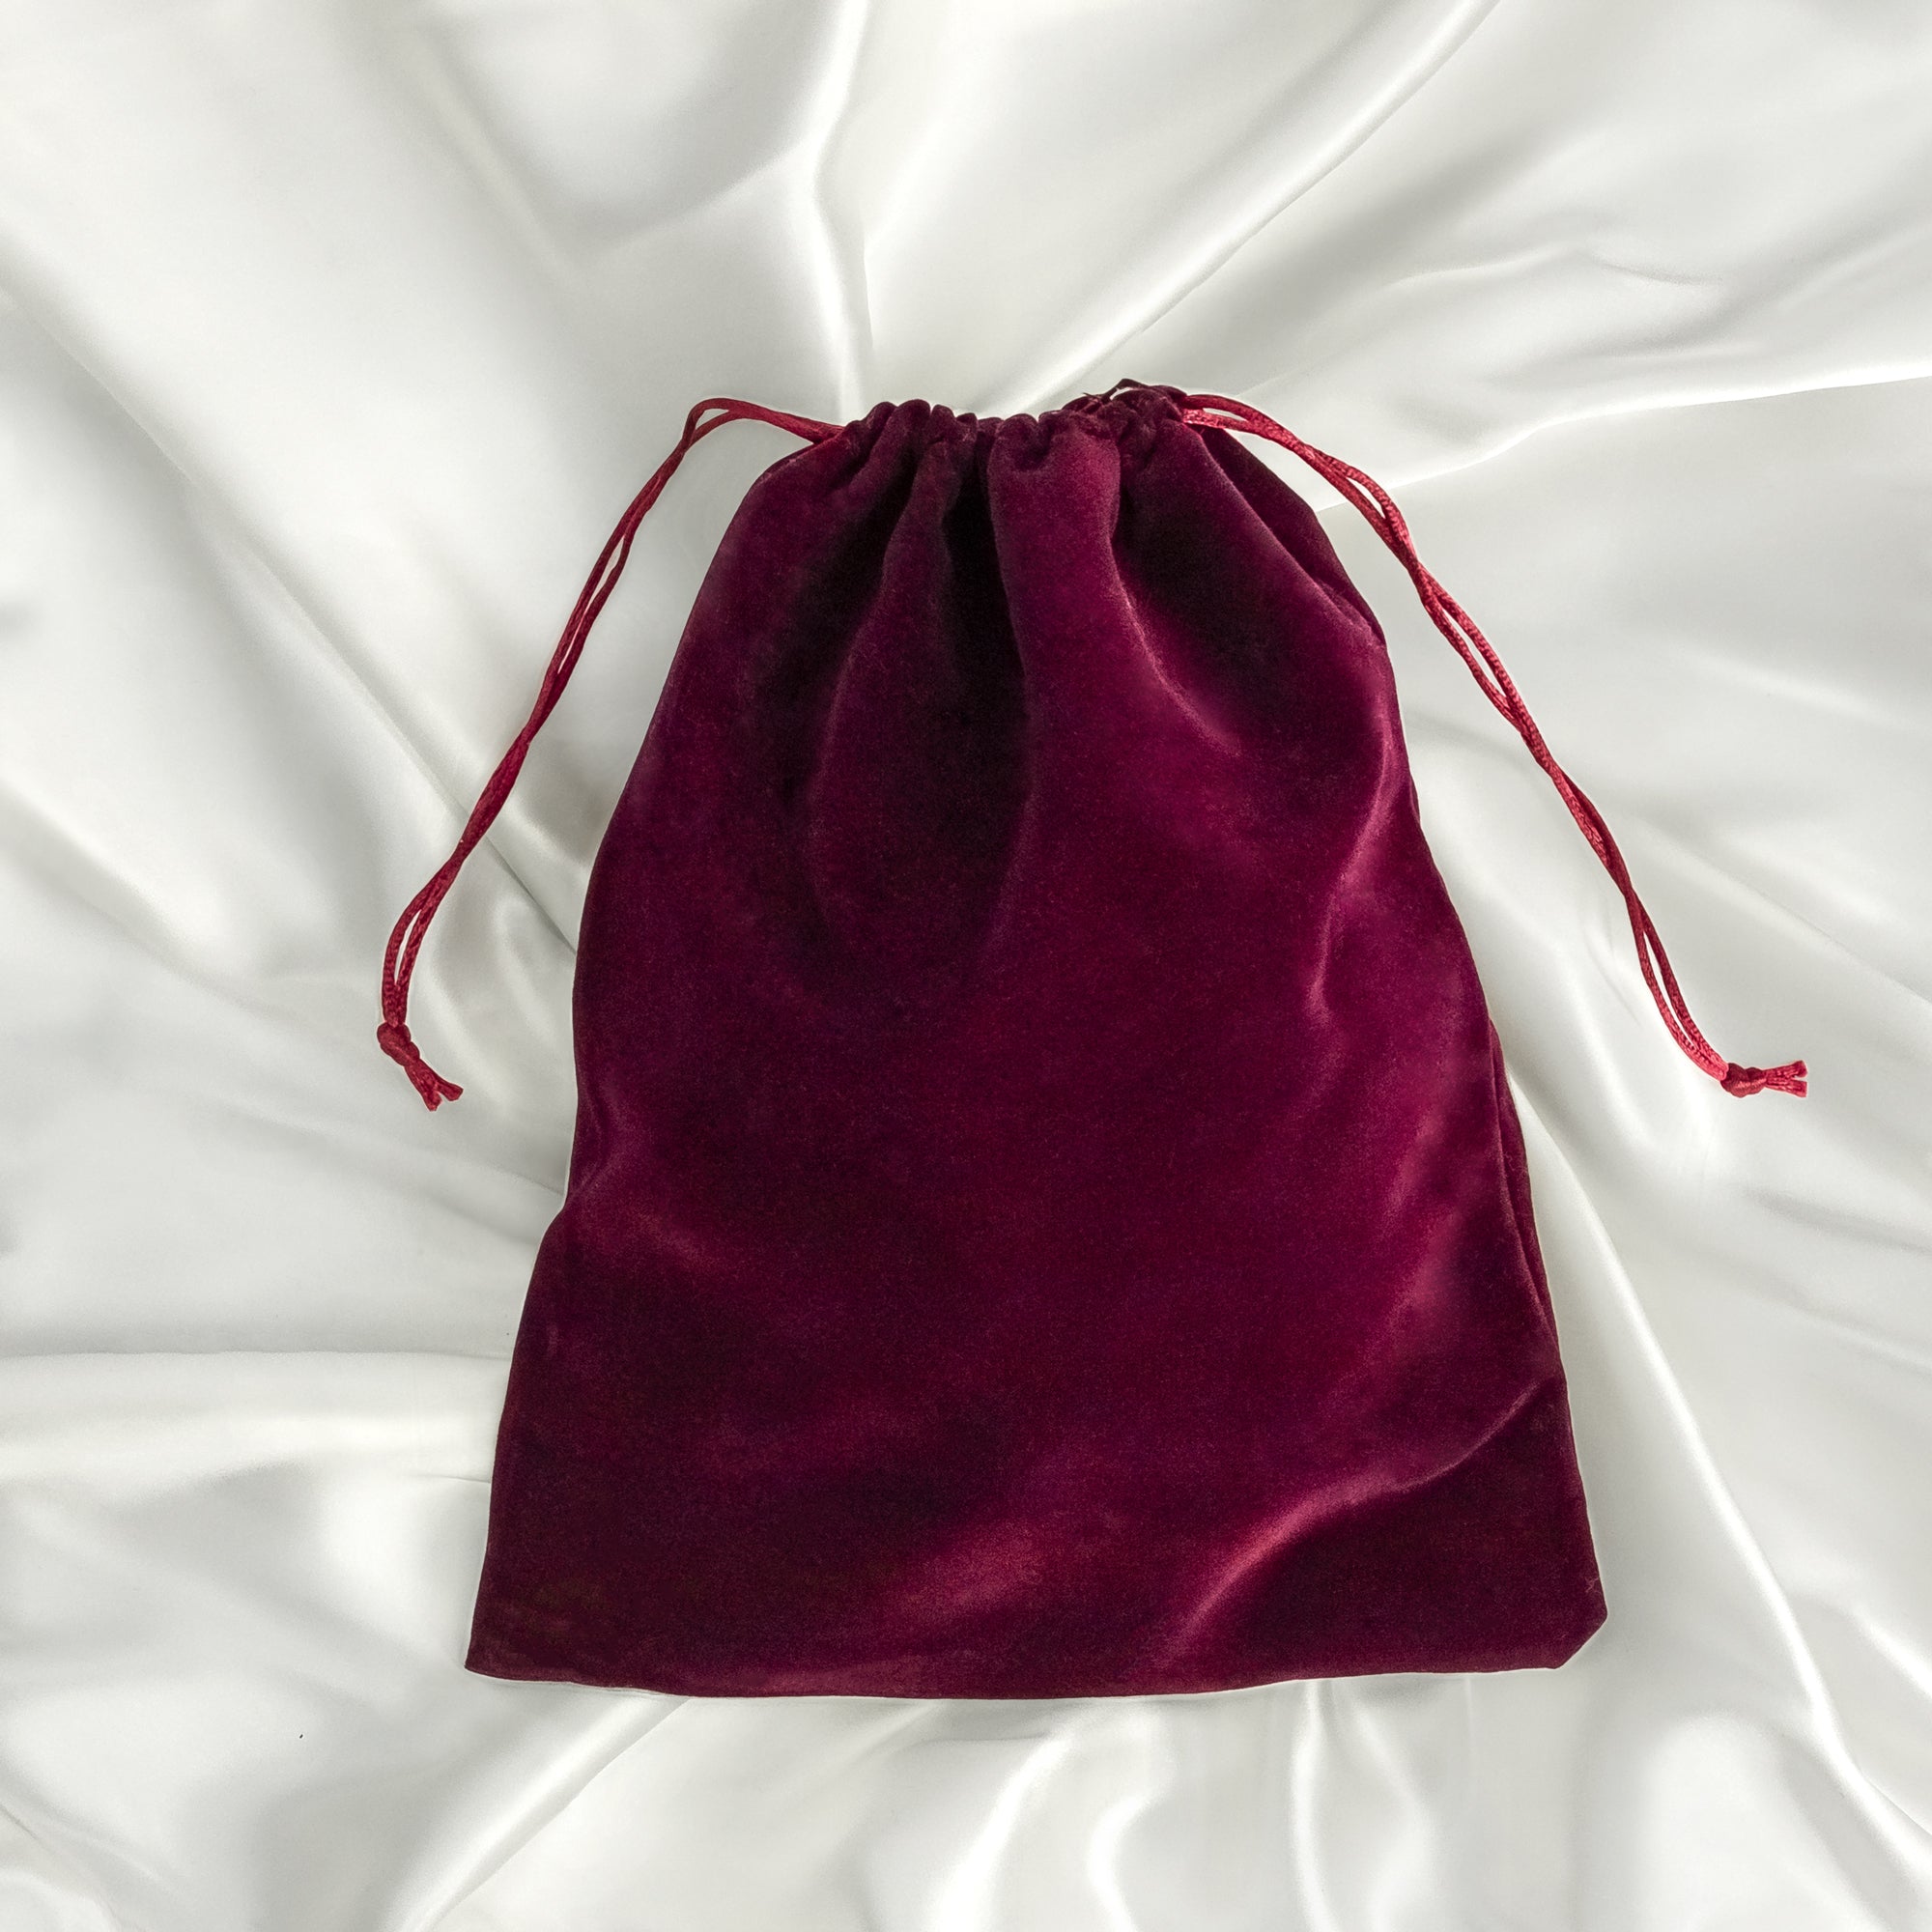 burgundy breast form pouch on silk background